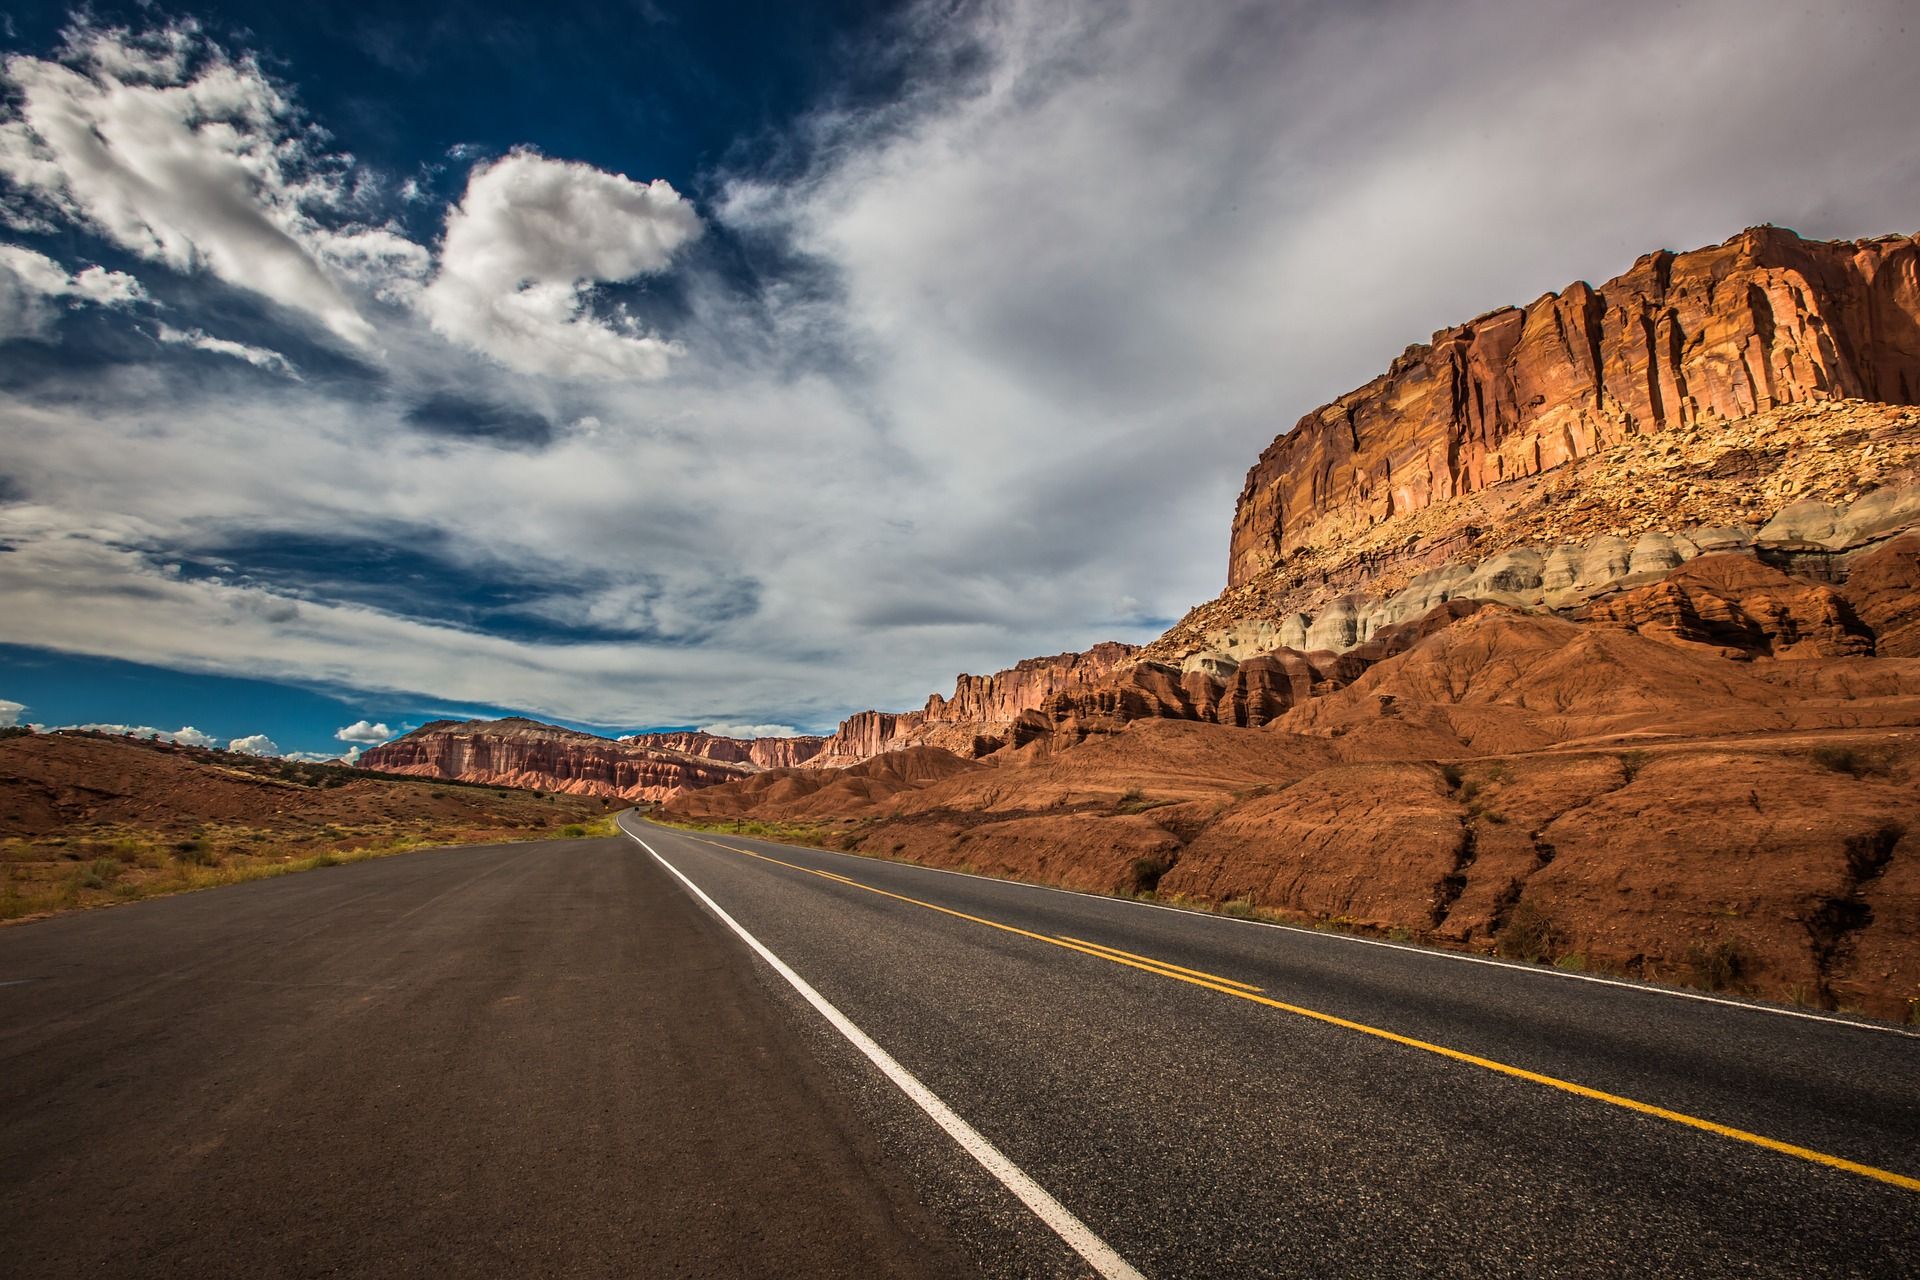 Driving through Red Rock Canyon, the Mojave Desert, Nevada, USA